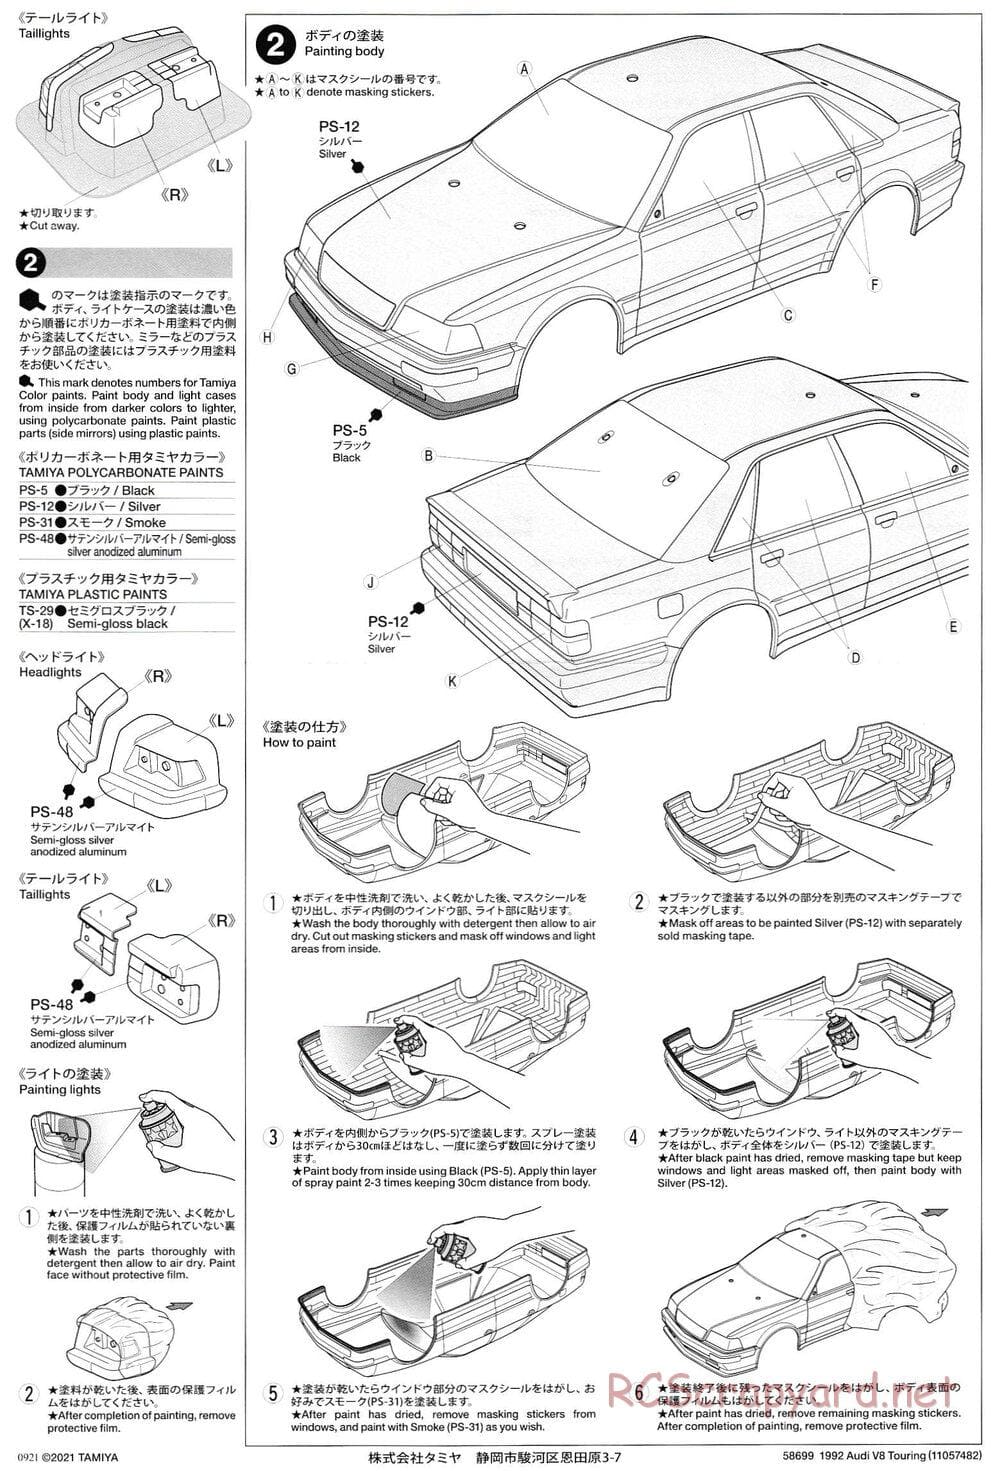 Tamiya - 1992 Audi V8 Touring - TT-02 Chassis - Body Manual - Page 3